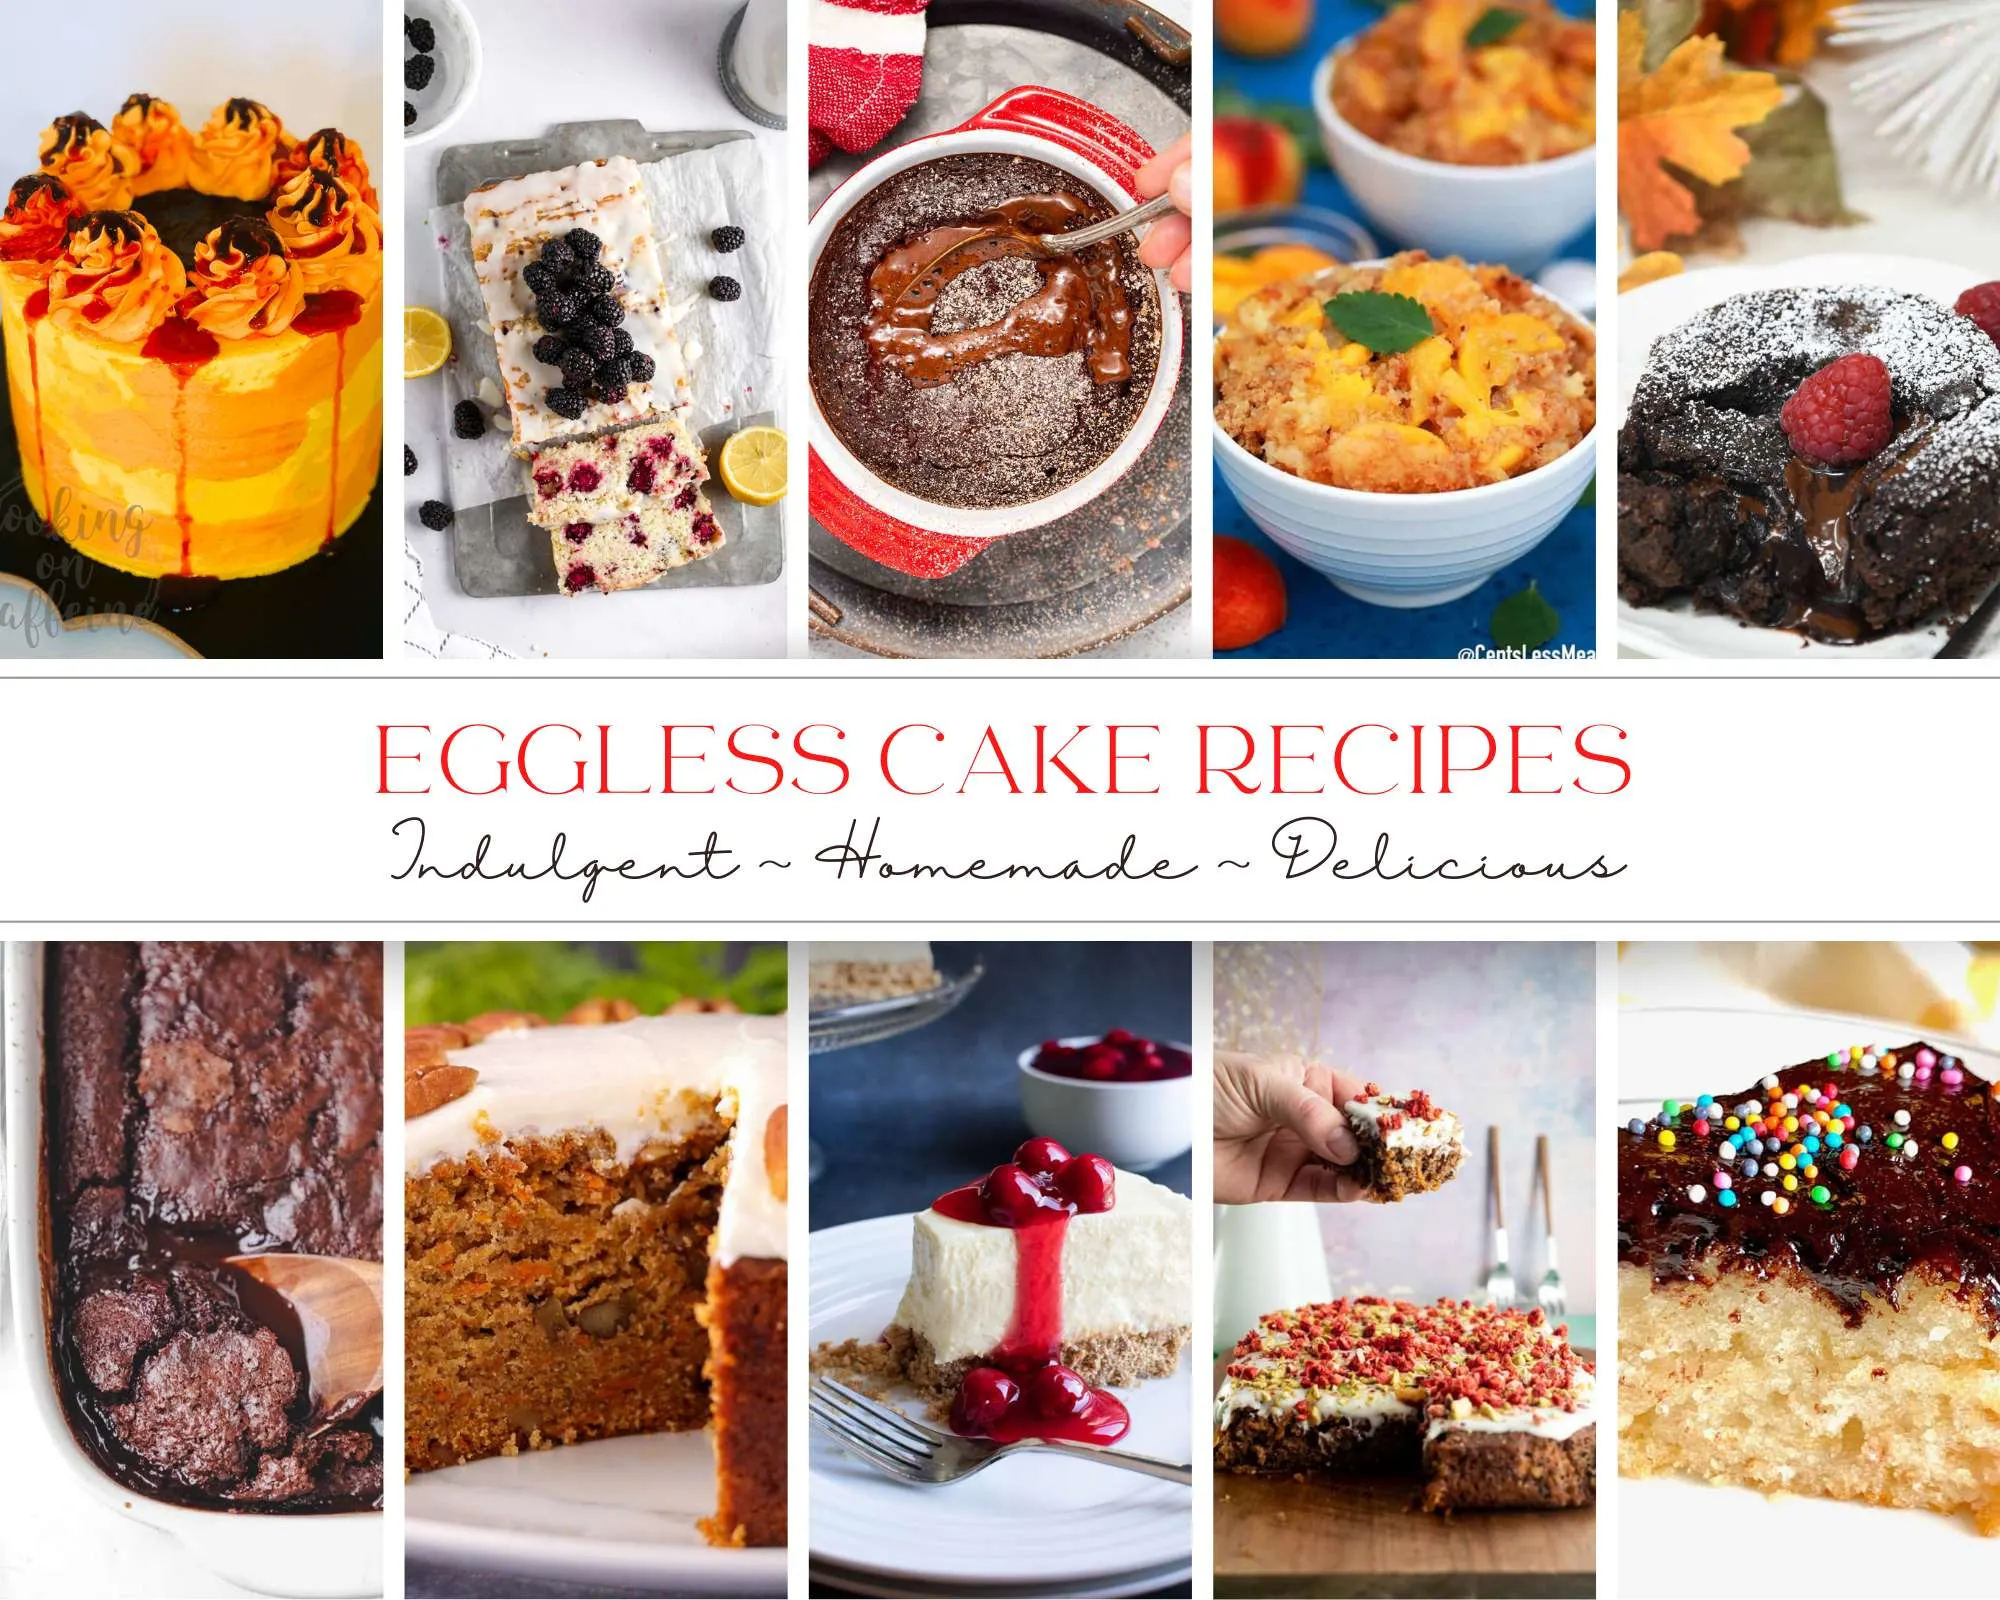 eggless birthday cake recipes | homemade celebration cakes | eggless cake  recipes.mov | bread cake: https://bit.ly/30nIzOt pineapple upside down cake:  https://bit.ly/2vrlXSe black forest cake: https://bit.ly/3bhjkkP coconut  cake:... | By Hebbar's Kitchen |